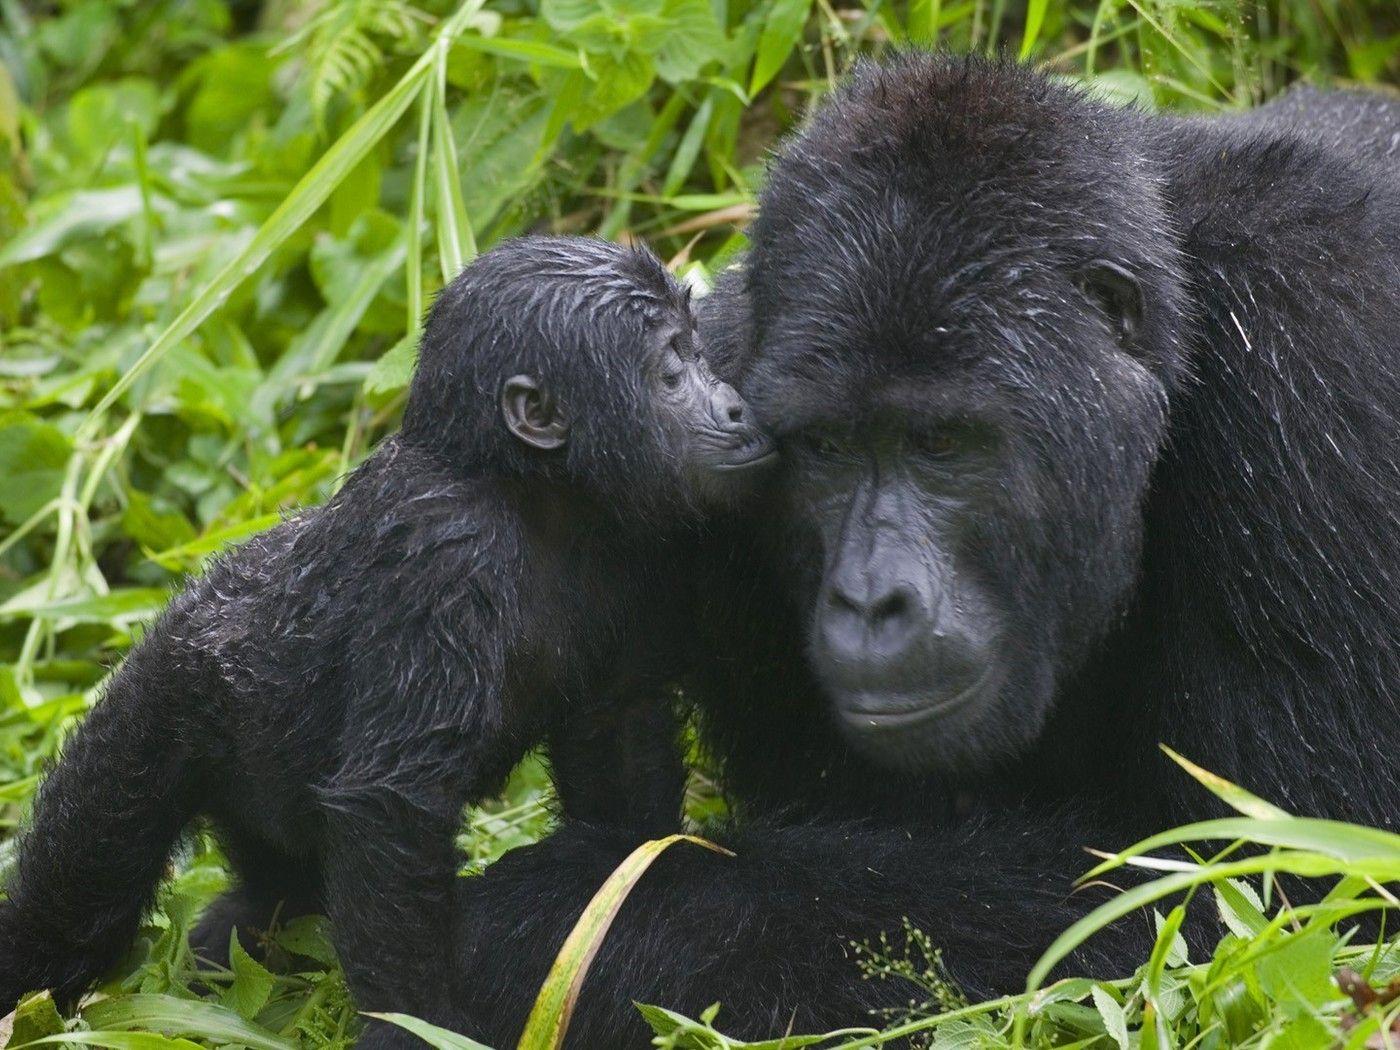 Track Gorillas at Bwindi Impenetrable National Park